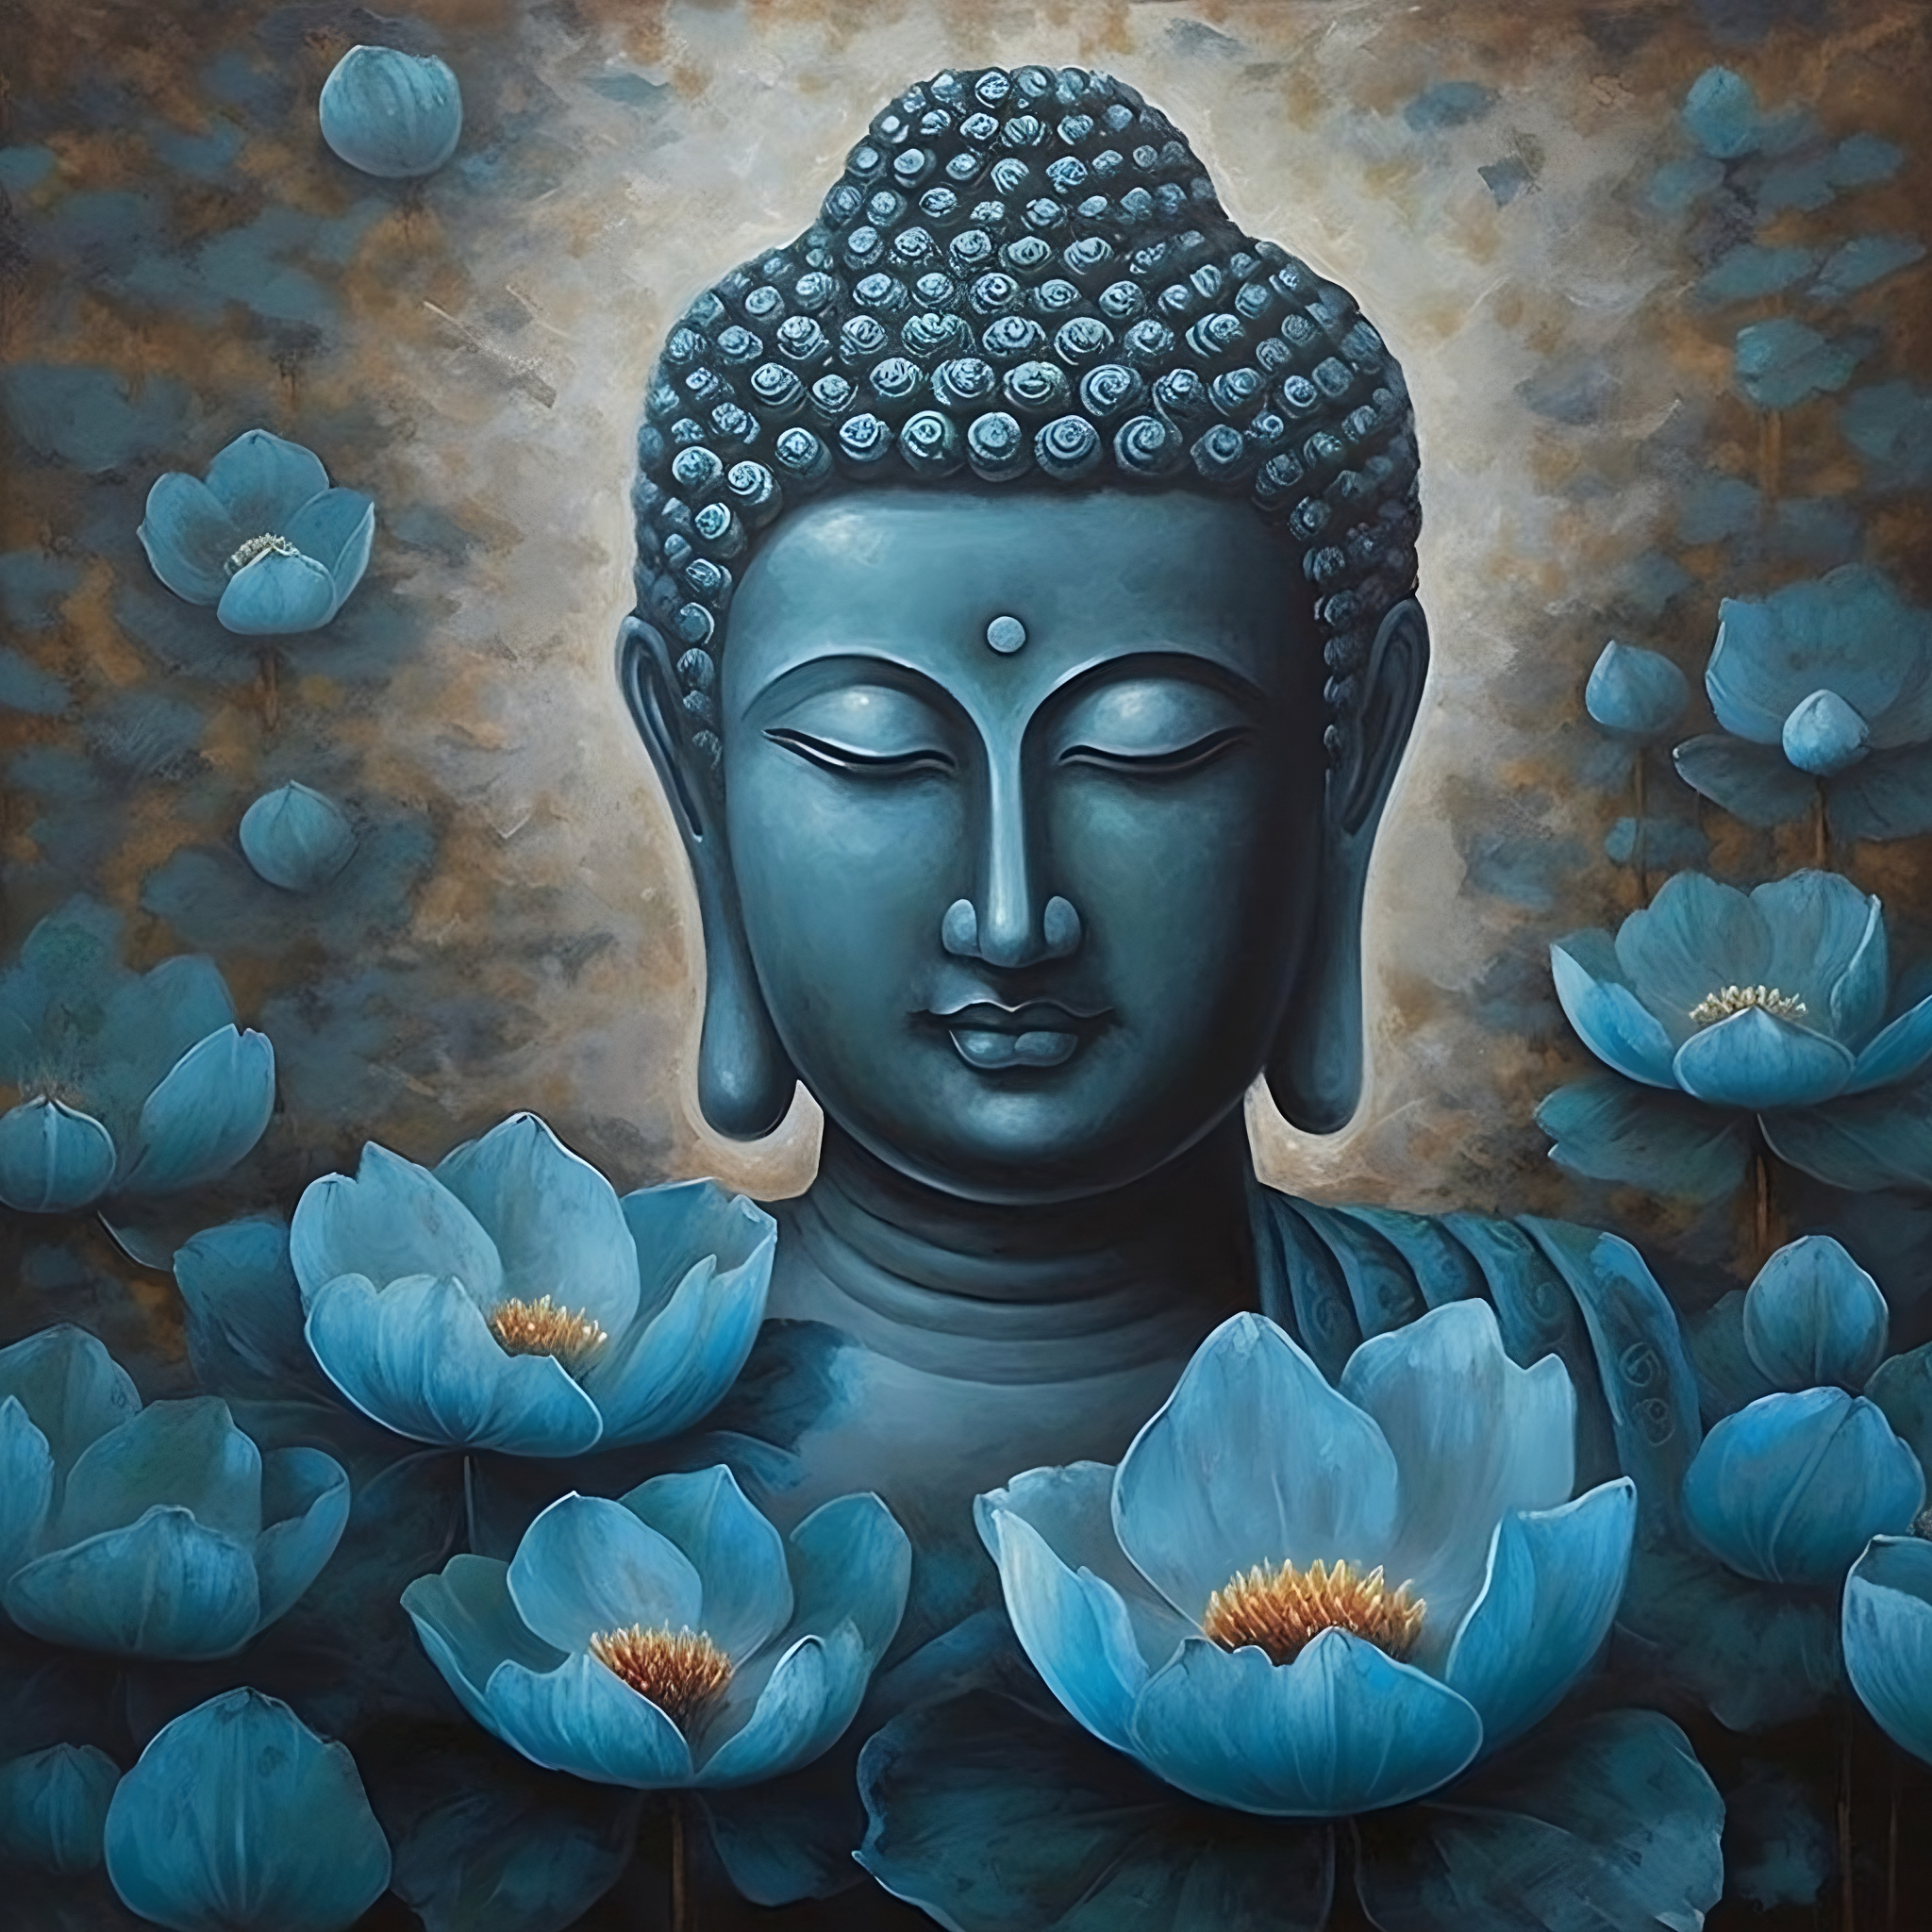 An Attractive Blue Petals Adorned Gautam Buddha Meditating Face Print for Tranquil Home Decor